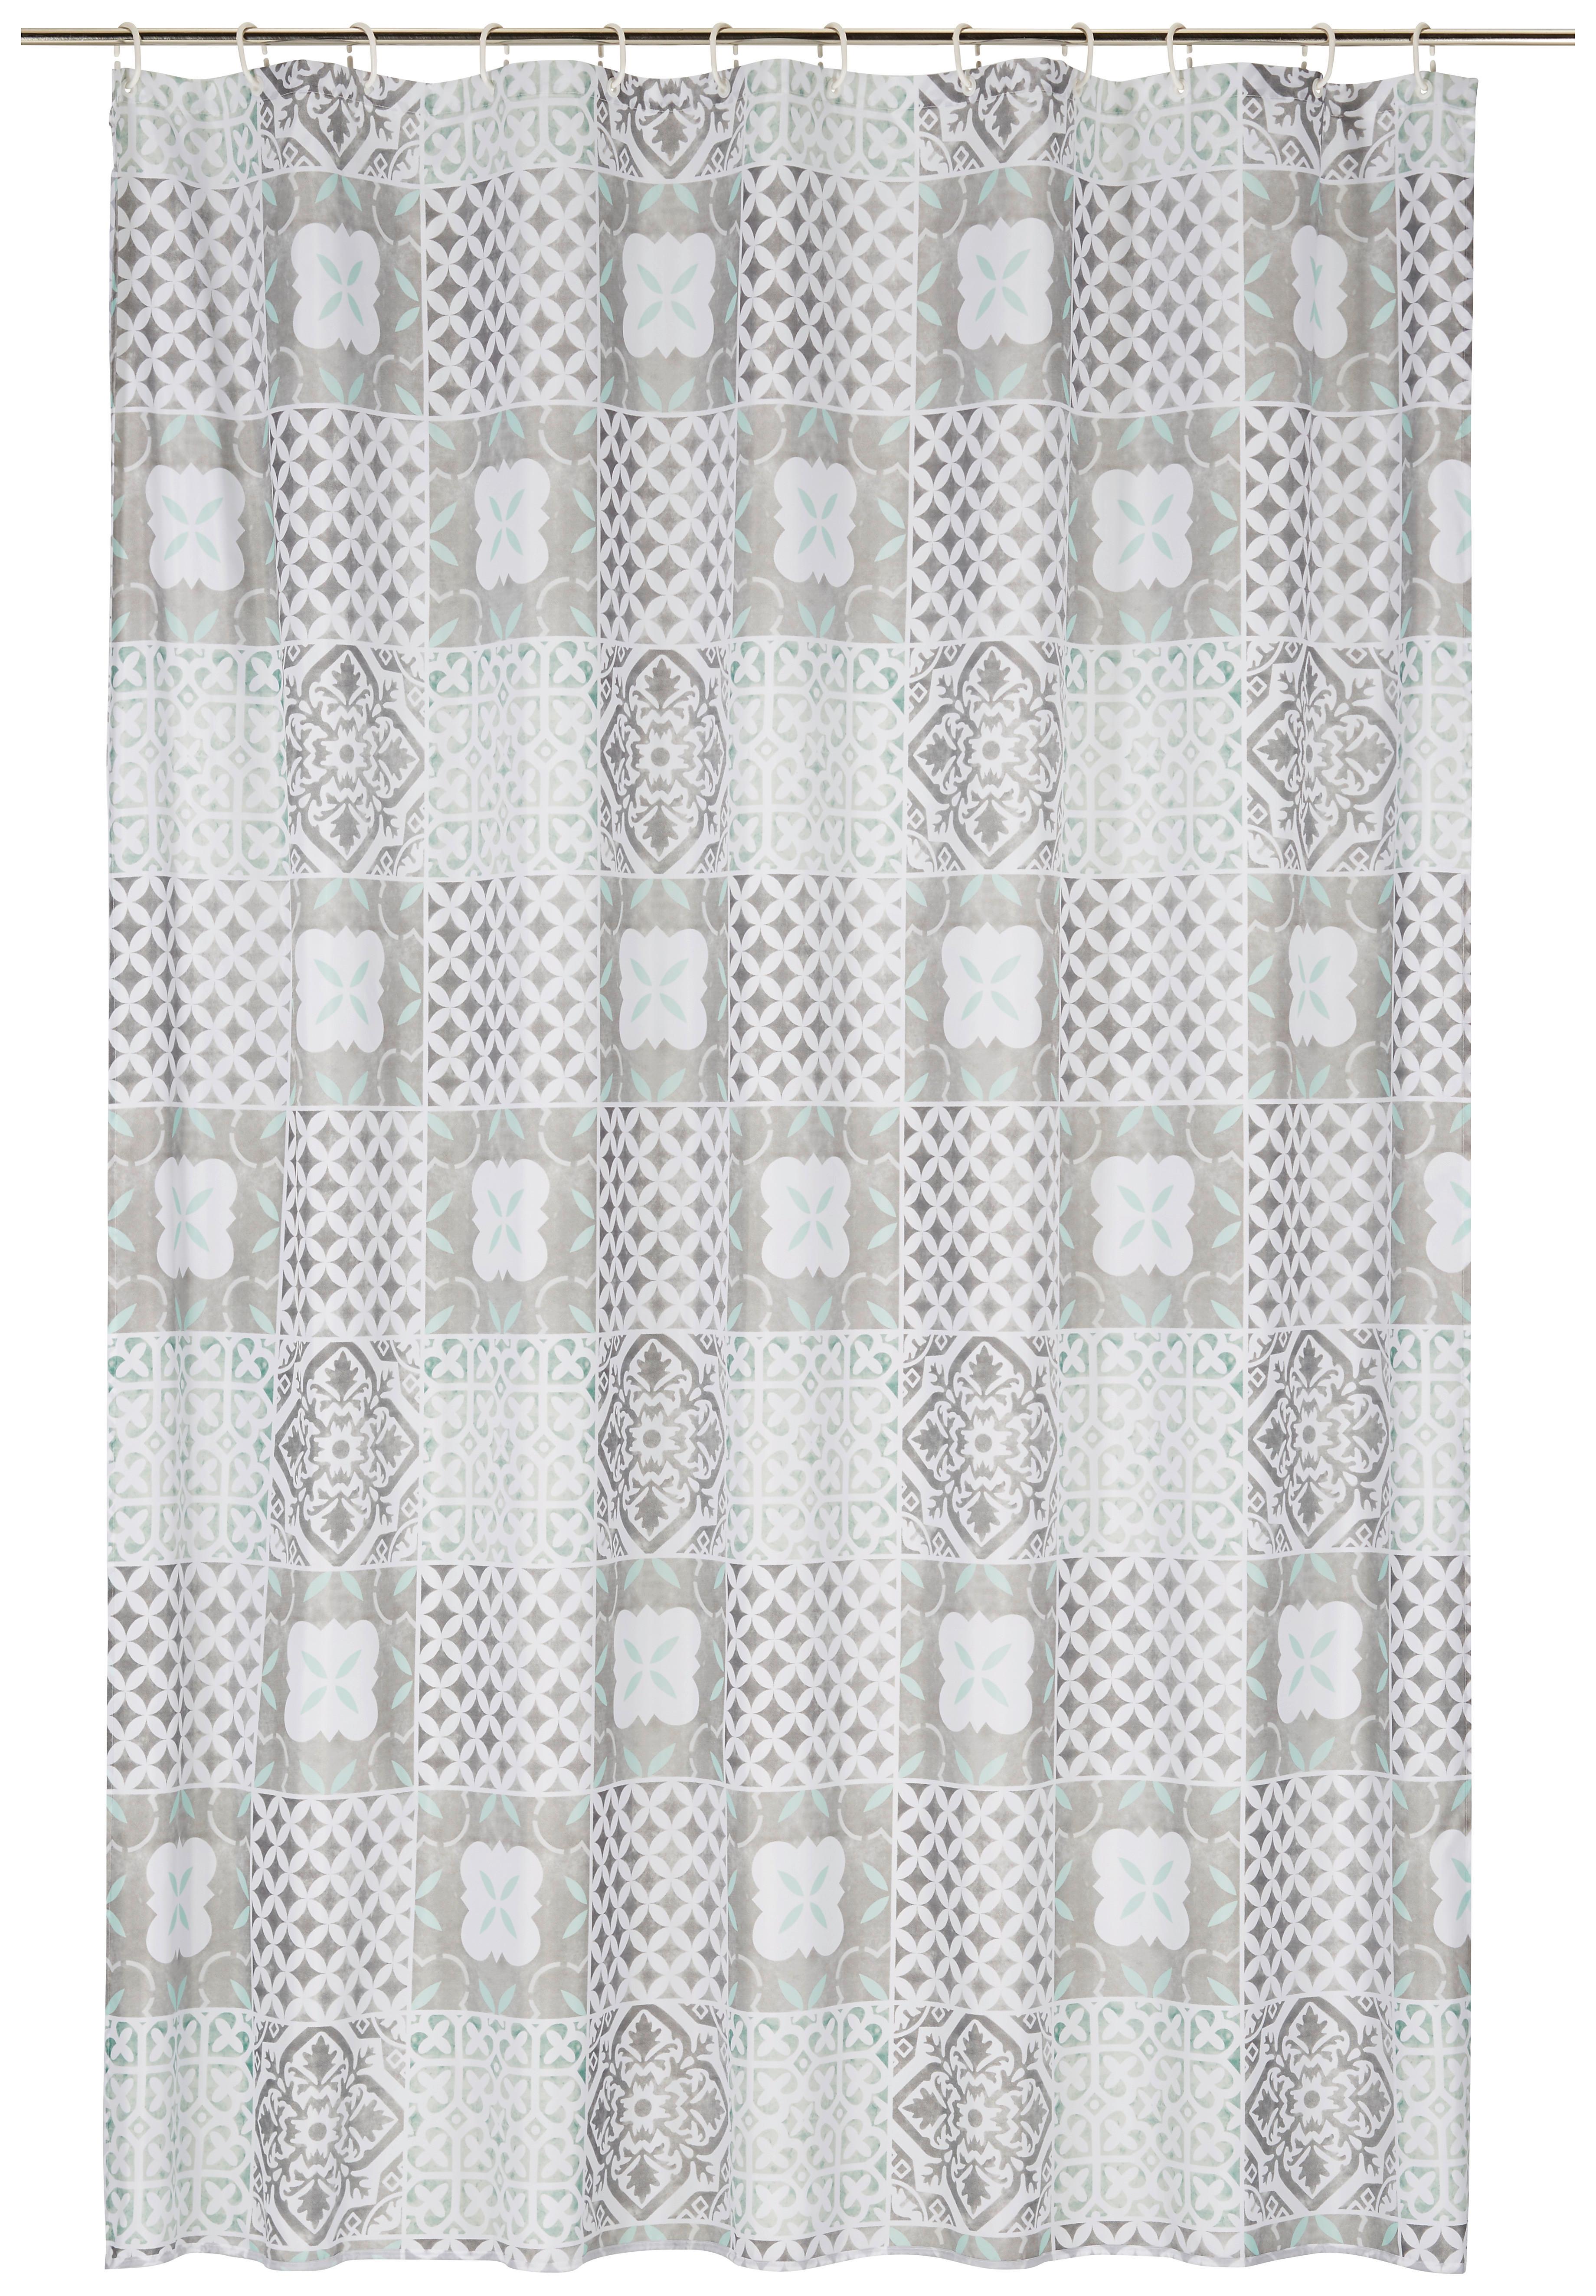 Duschvorhang Marrakesh ca. 180x200cm - Anthrazit/Weiß, LIFESTYLE, Textil (180/200cm) - Modern Living